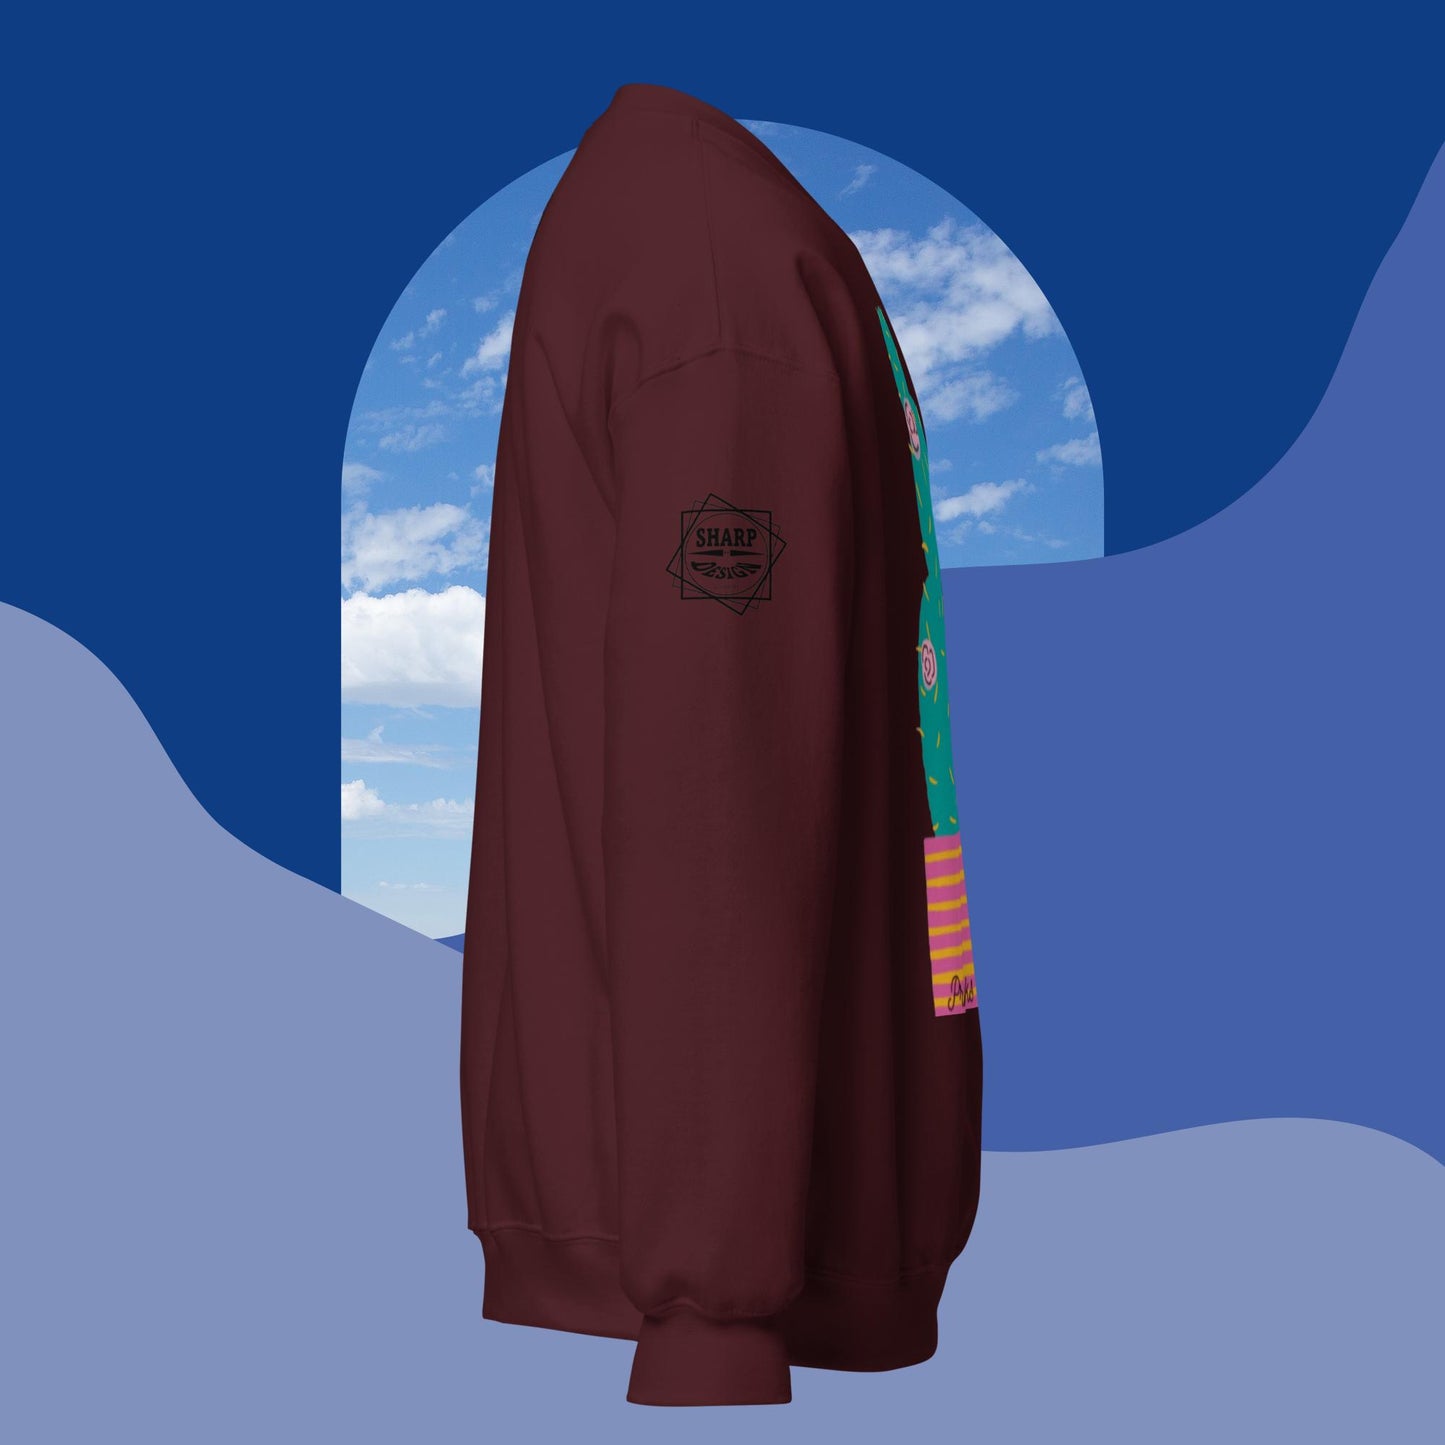 Sharp by Design 'Pricks' No.1 (Front Large) - Unisex Sweatshirt